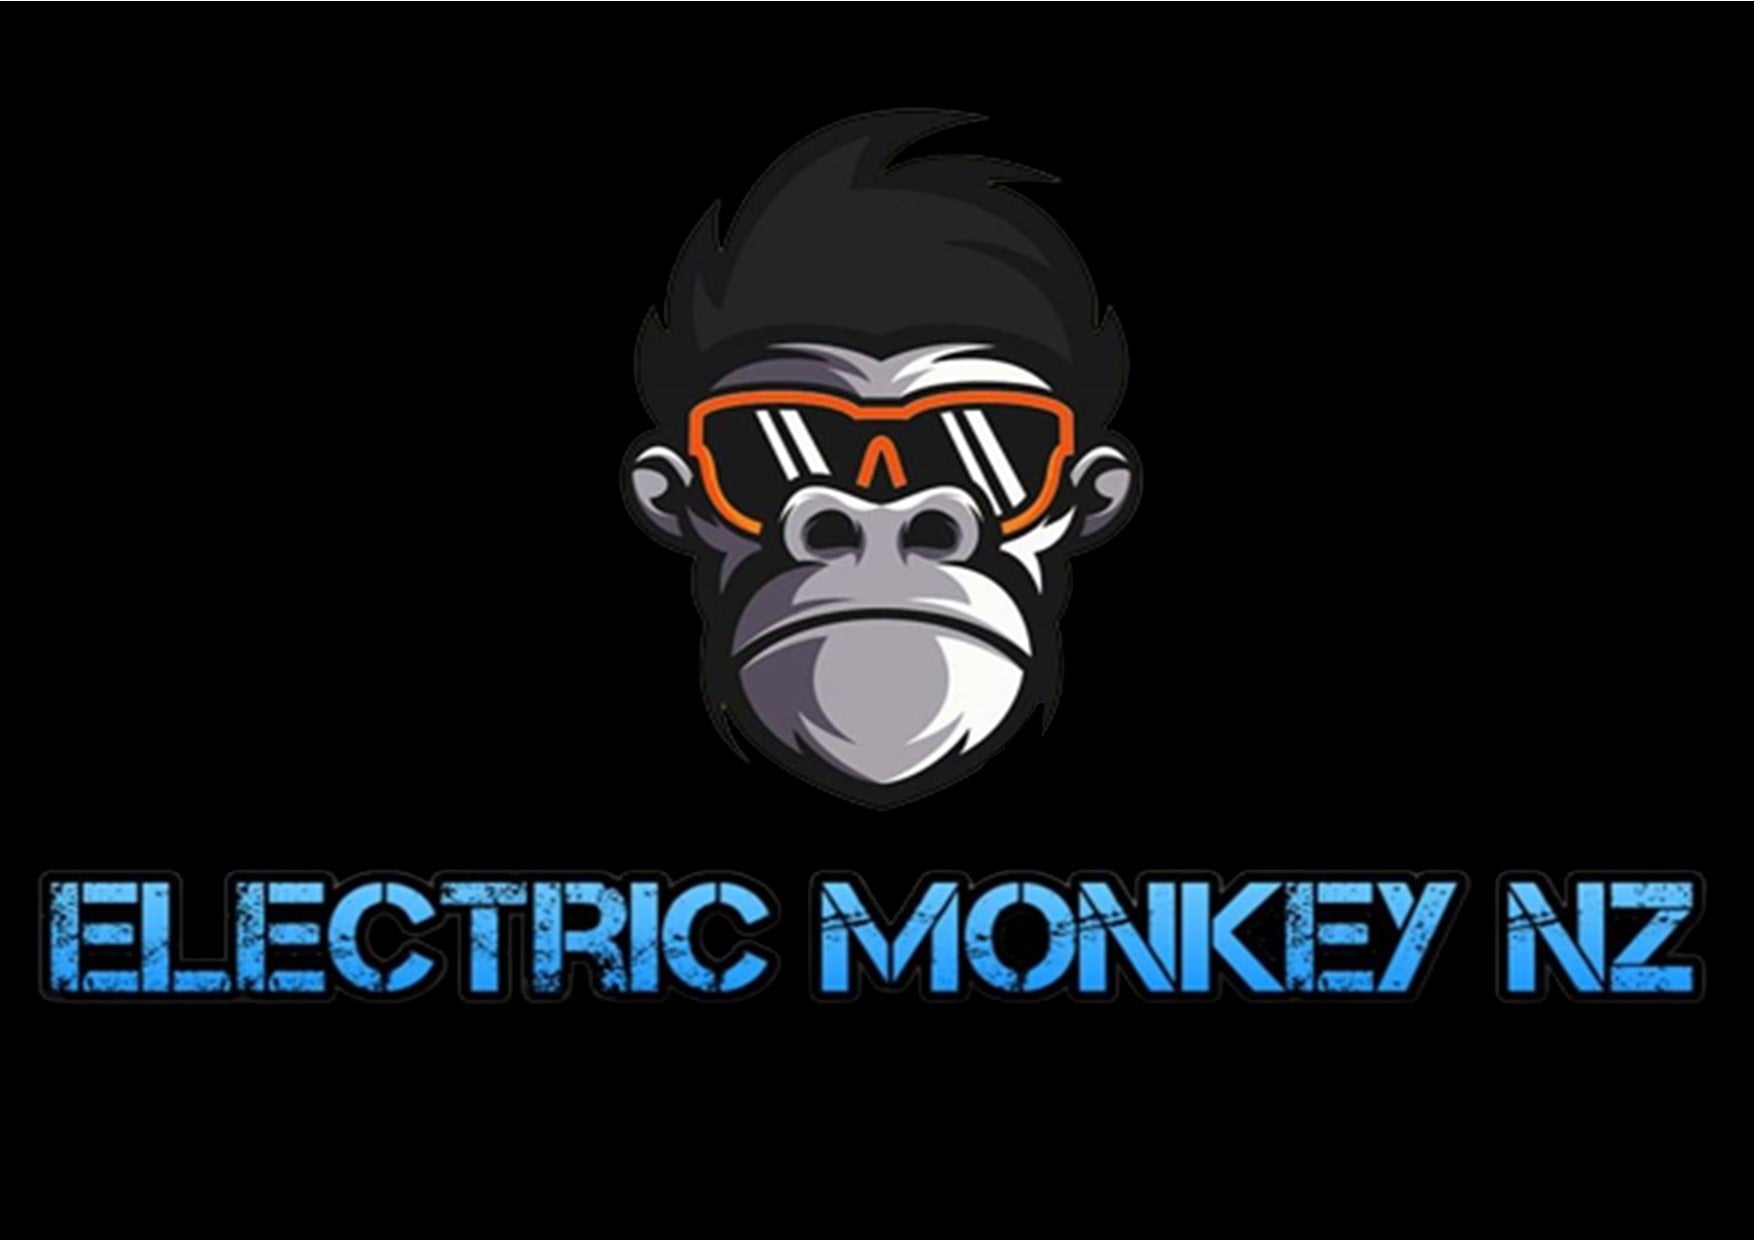 Electric Monkey NZ